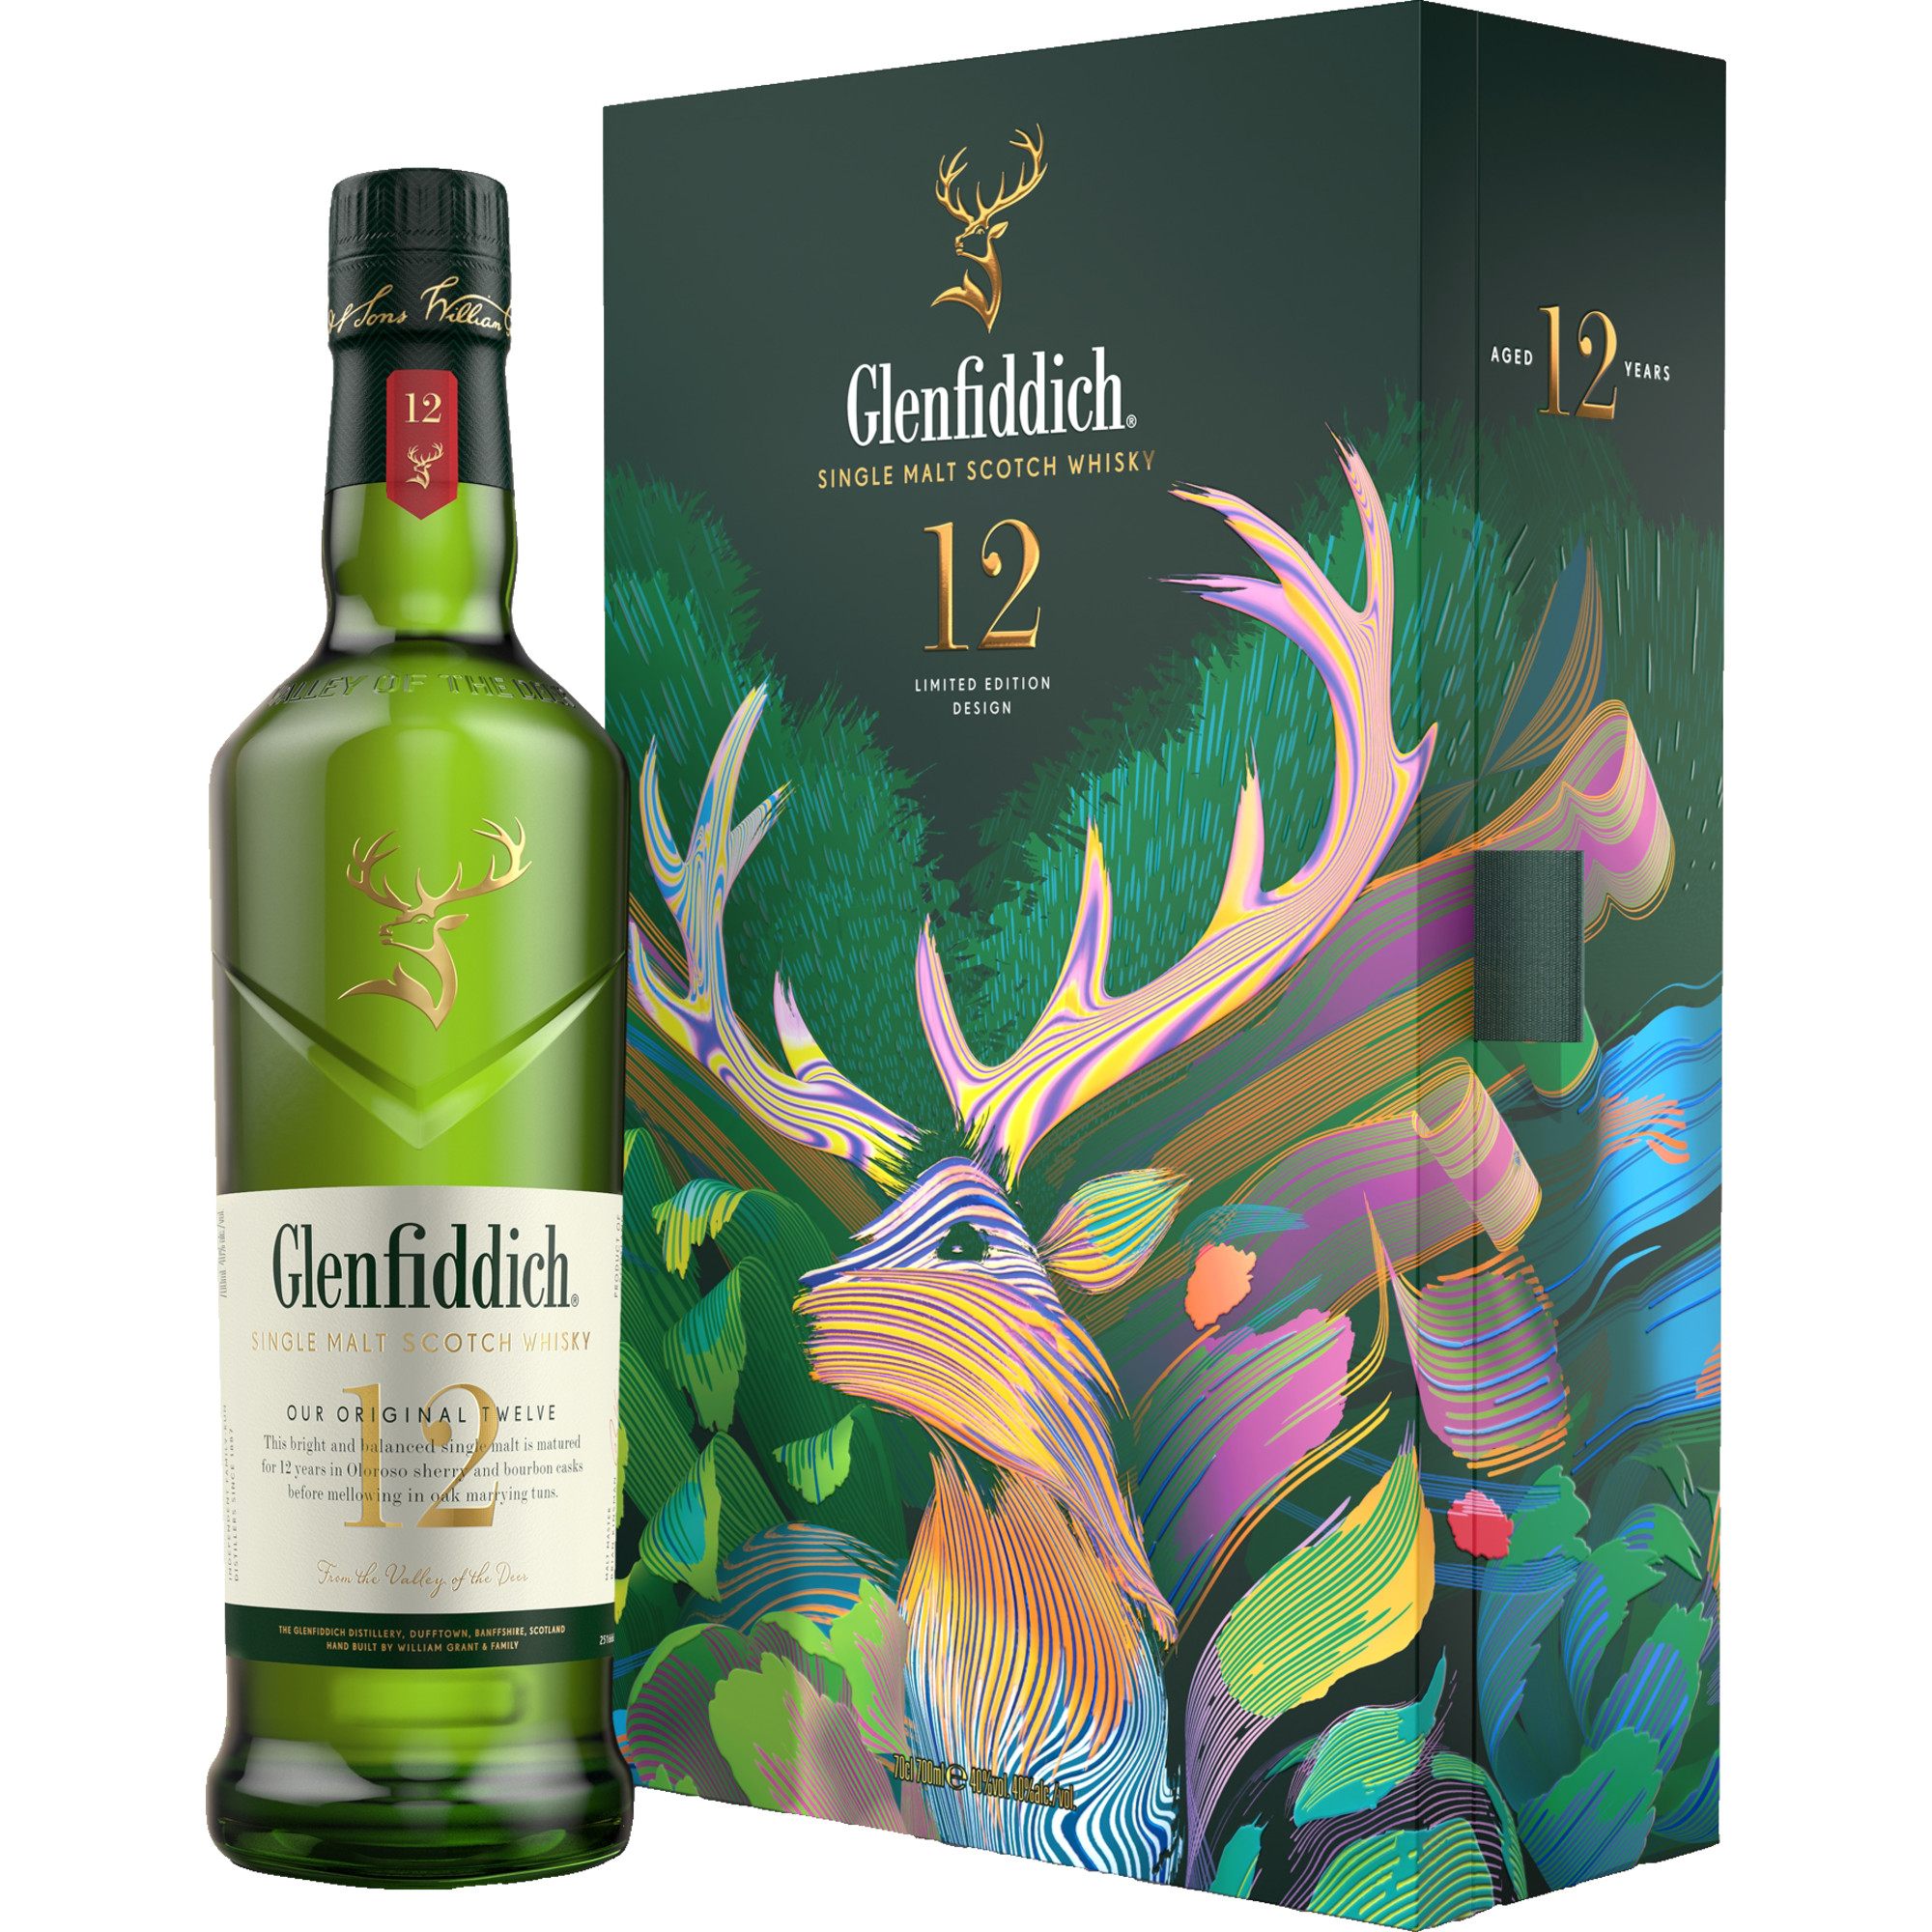 Glenfiddich 12 Years Artist Pack, Single Malt Whisky, 0,7L, 40% Vol., Schottland, Spirituosen William Grant & Sons Global Brands Ltd., Tullamore, Ireland Hawesko DE